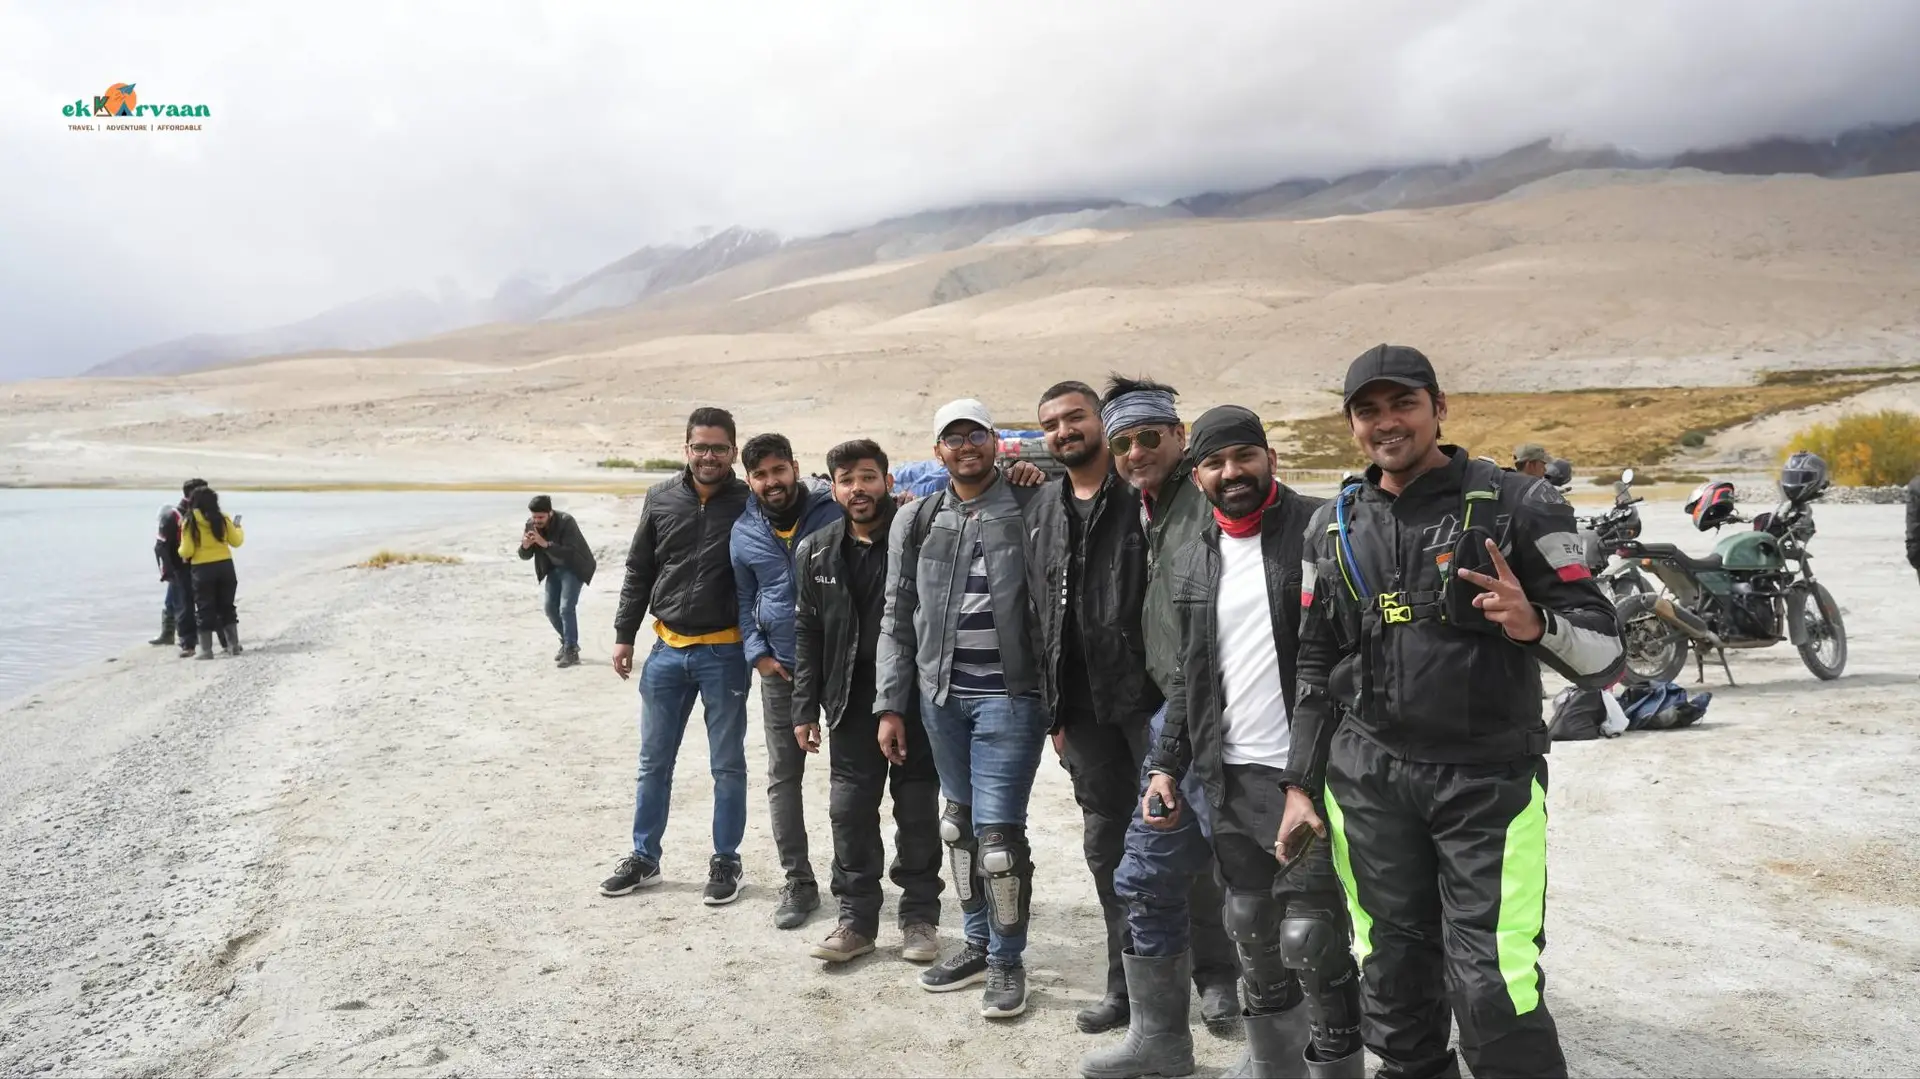 Leh Ladakh bike trip_ekkarvaan